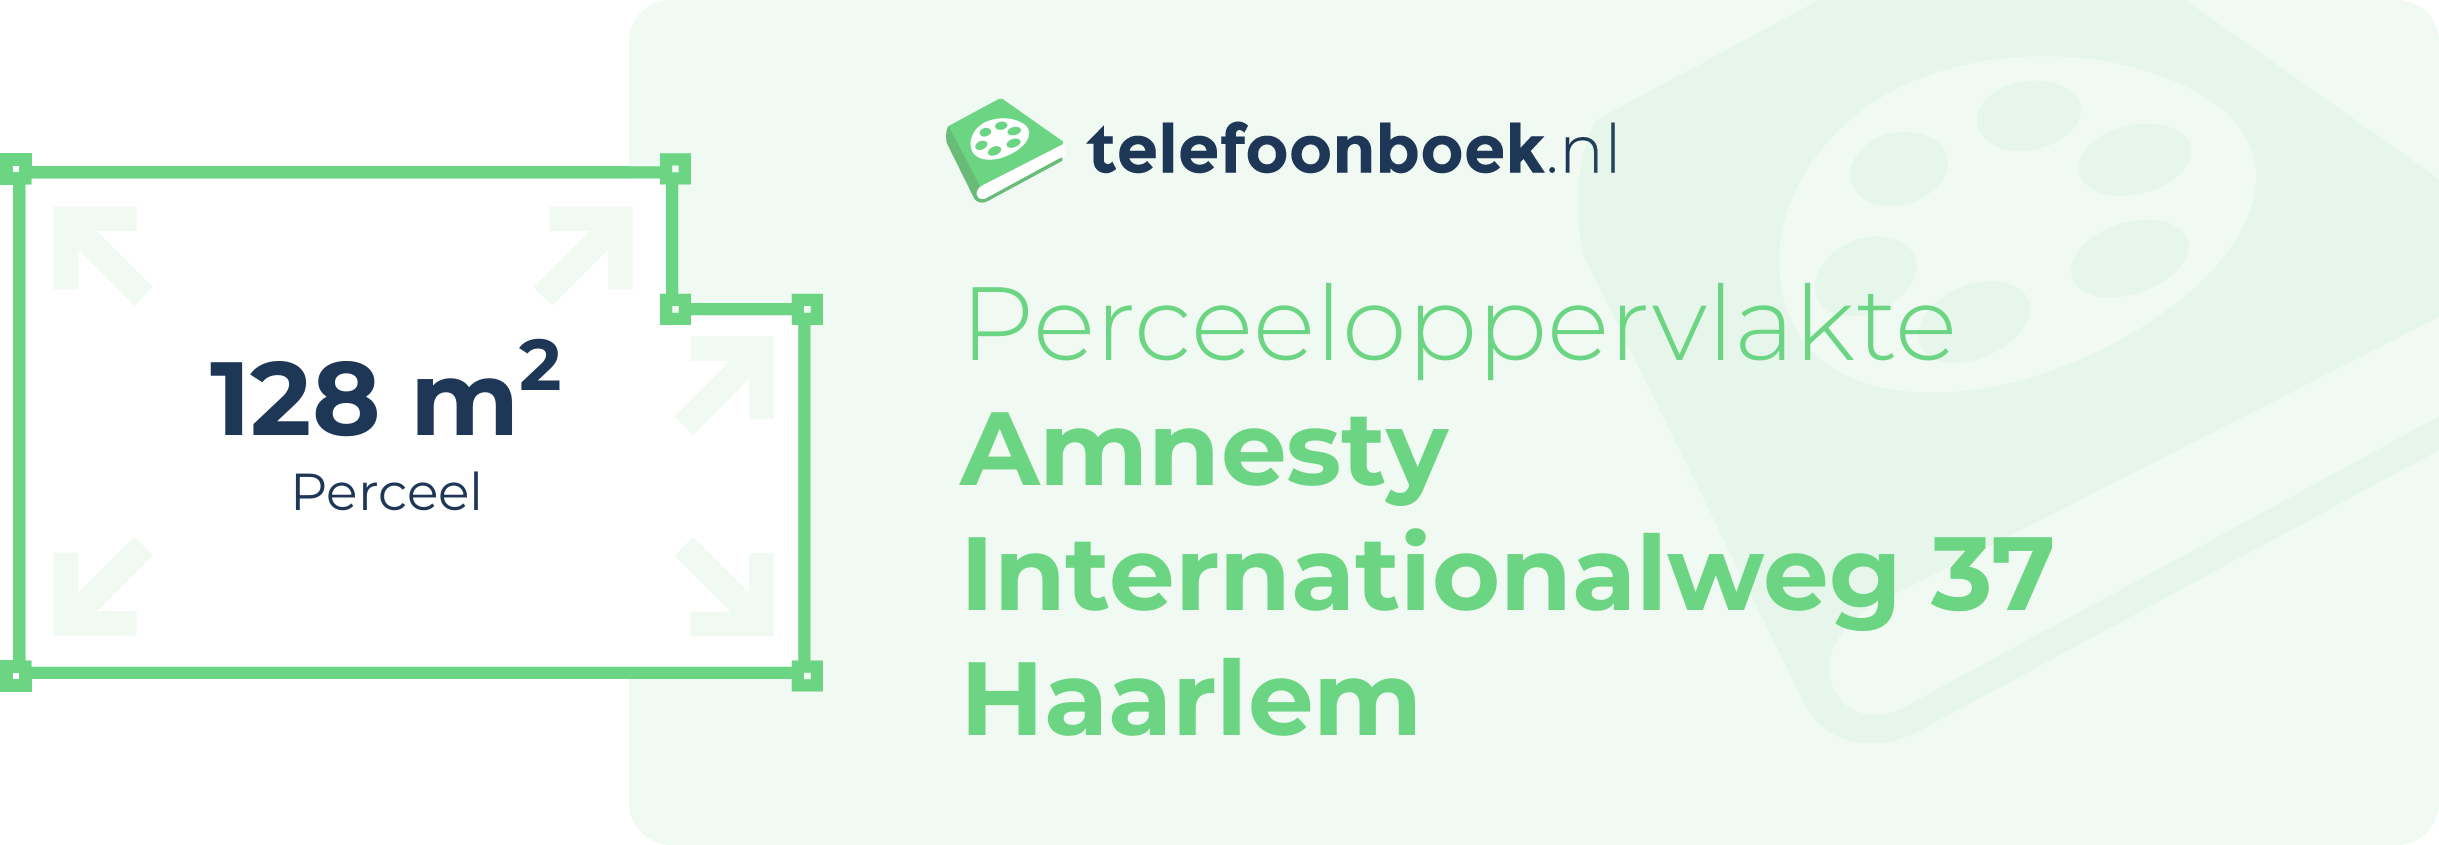 Perceeloppervlakte Amnesty Internationalweg 37 Haarlem